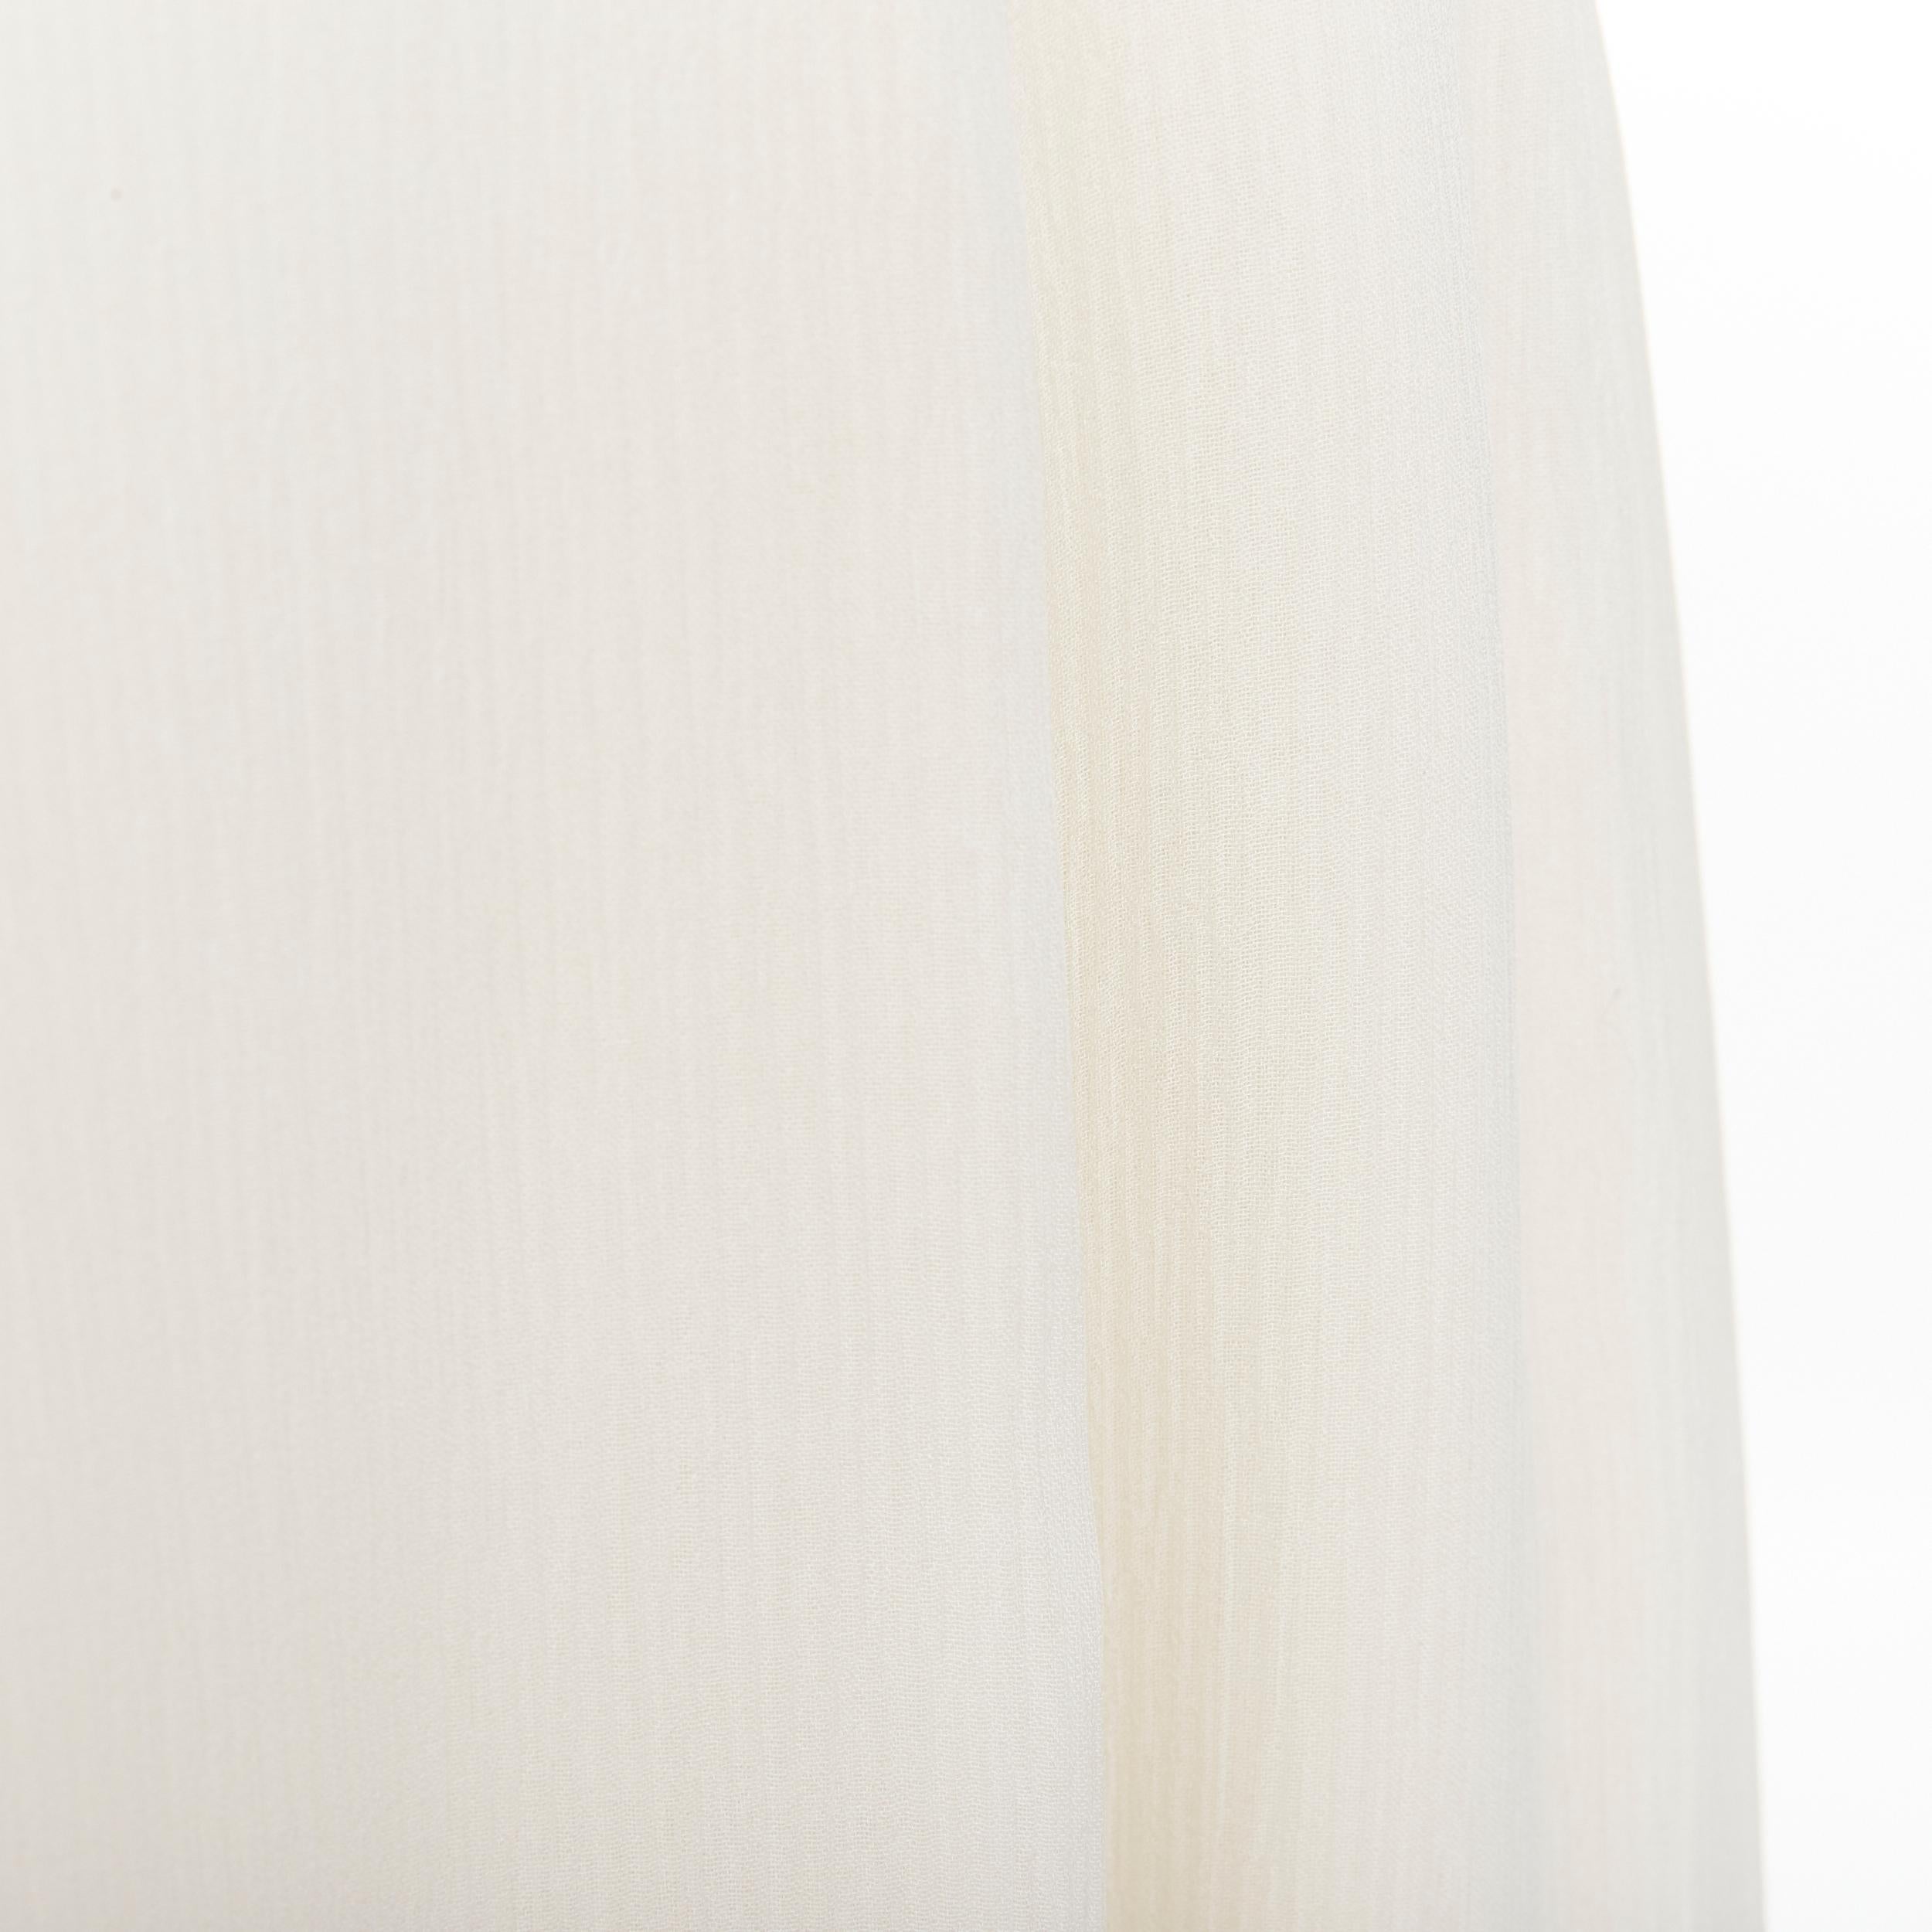 OSCAR DE LA RENTA ivory white boned corset strapless evening gown dress US0 XS 3